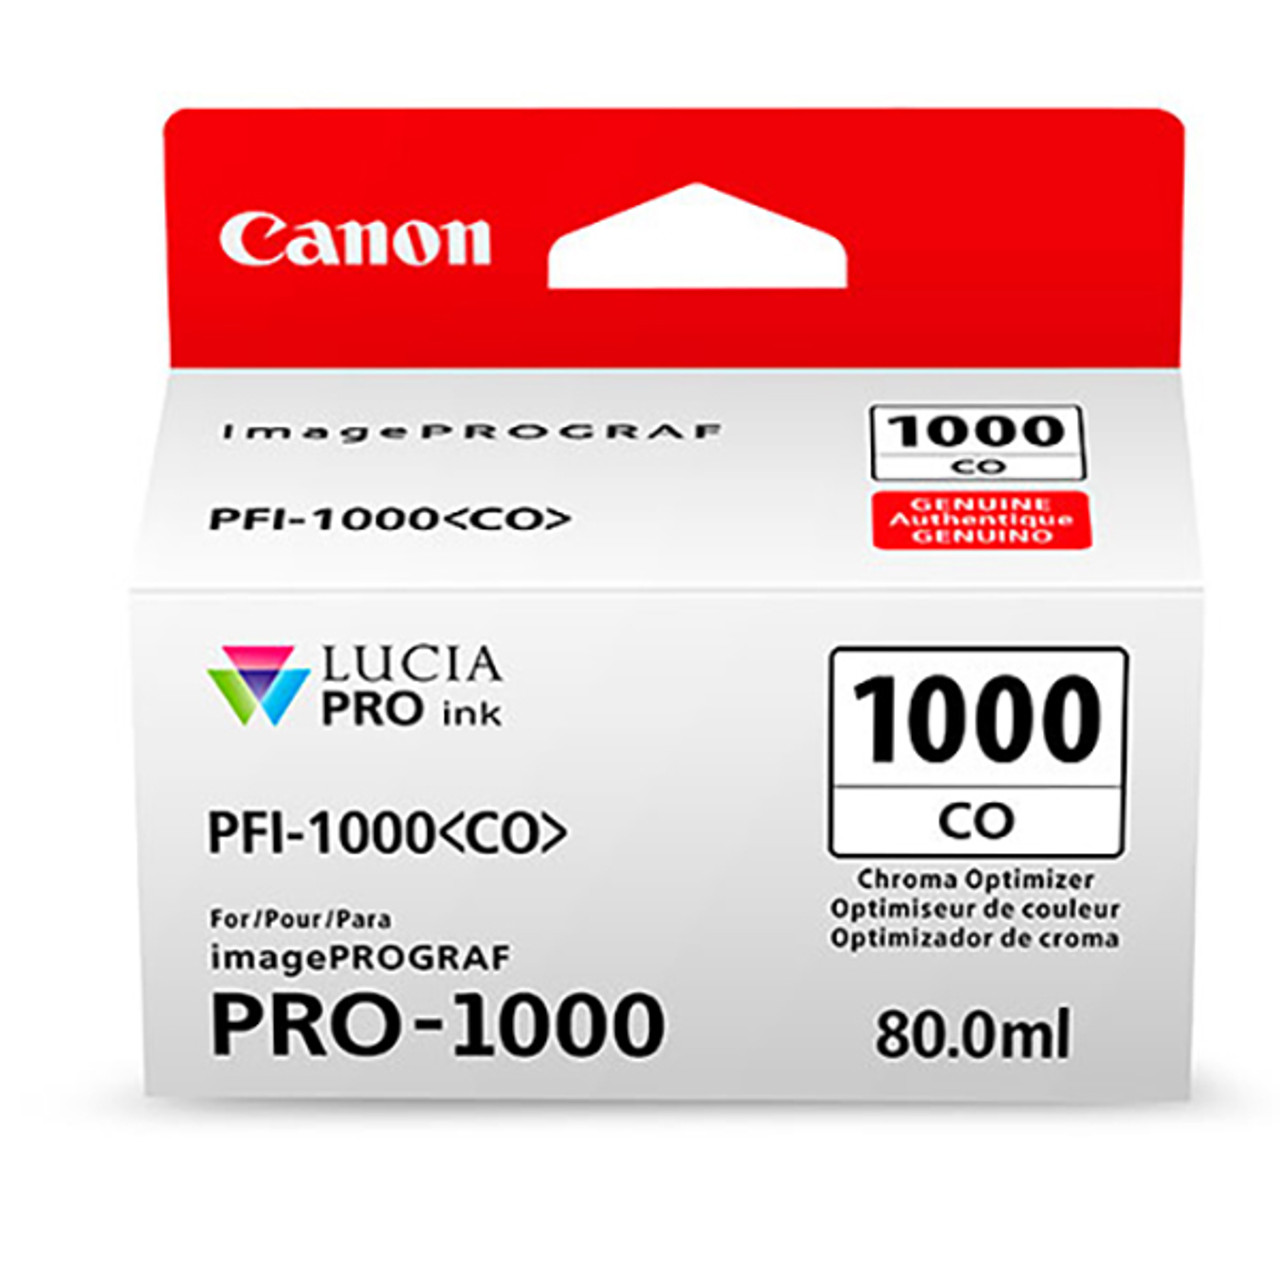 CANON PFI-1000 INK TANK (CHROMA OPTIMIZER)